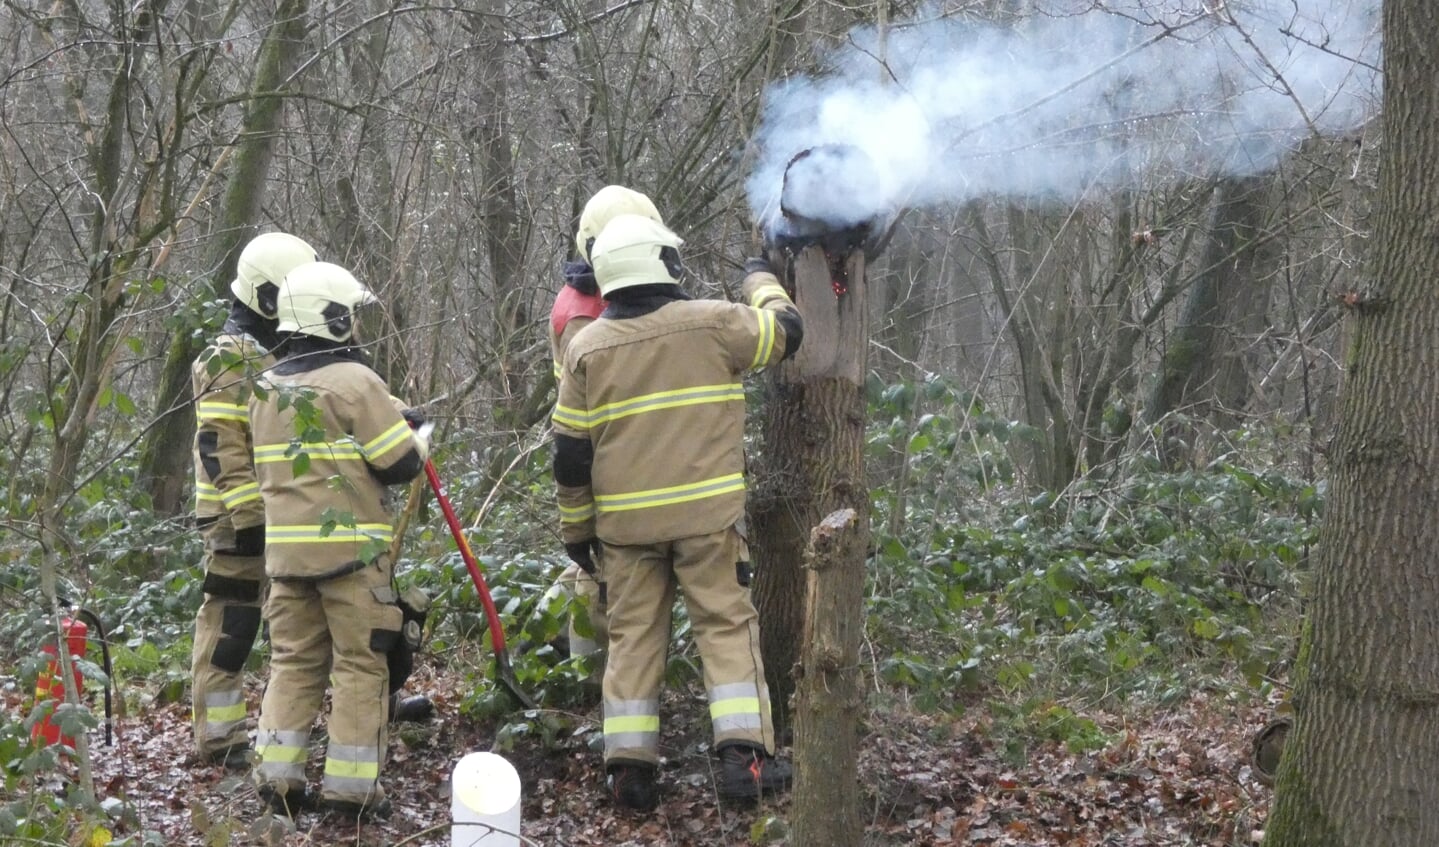 Brandweer opgeroepen voor brandende boomstronk. (Foto: Thomas)